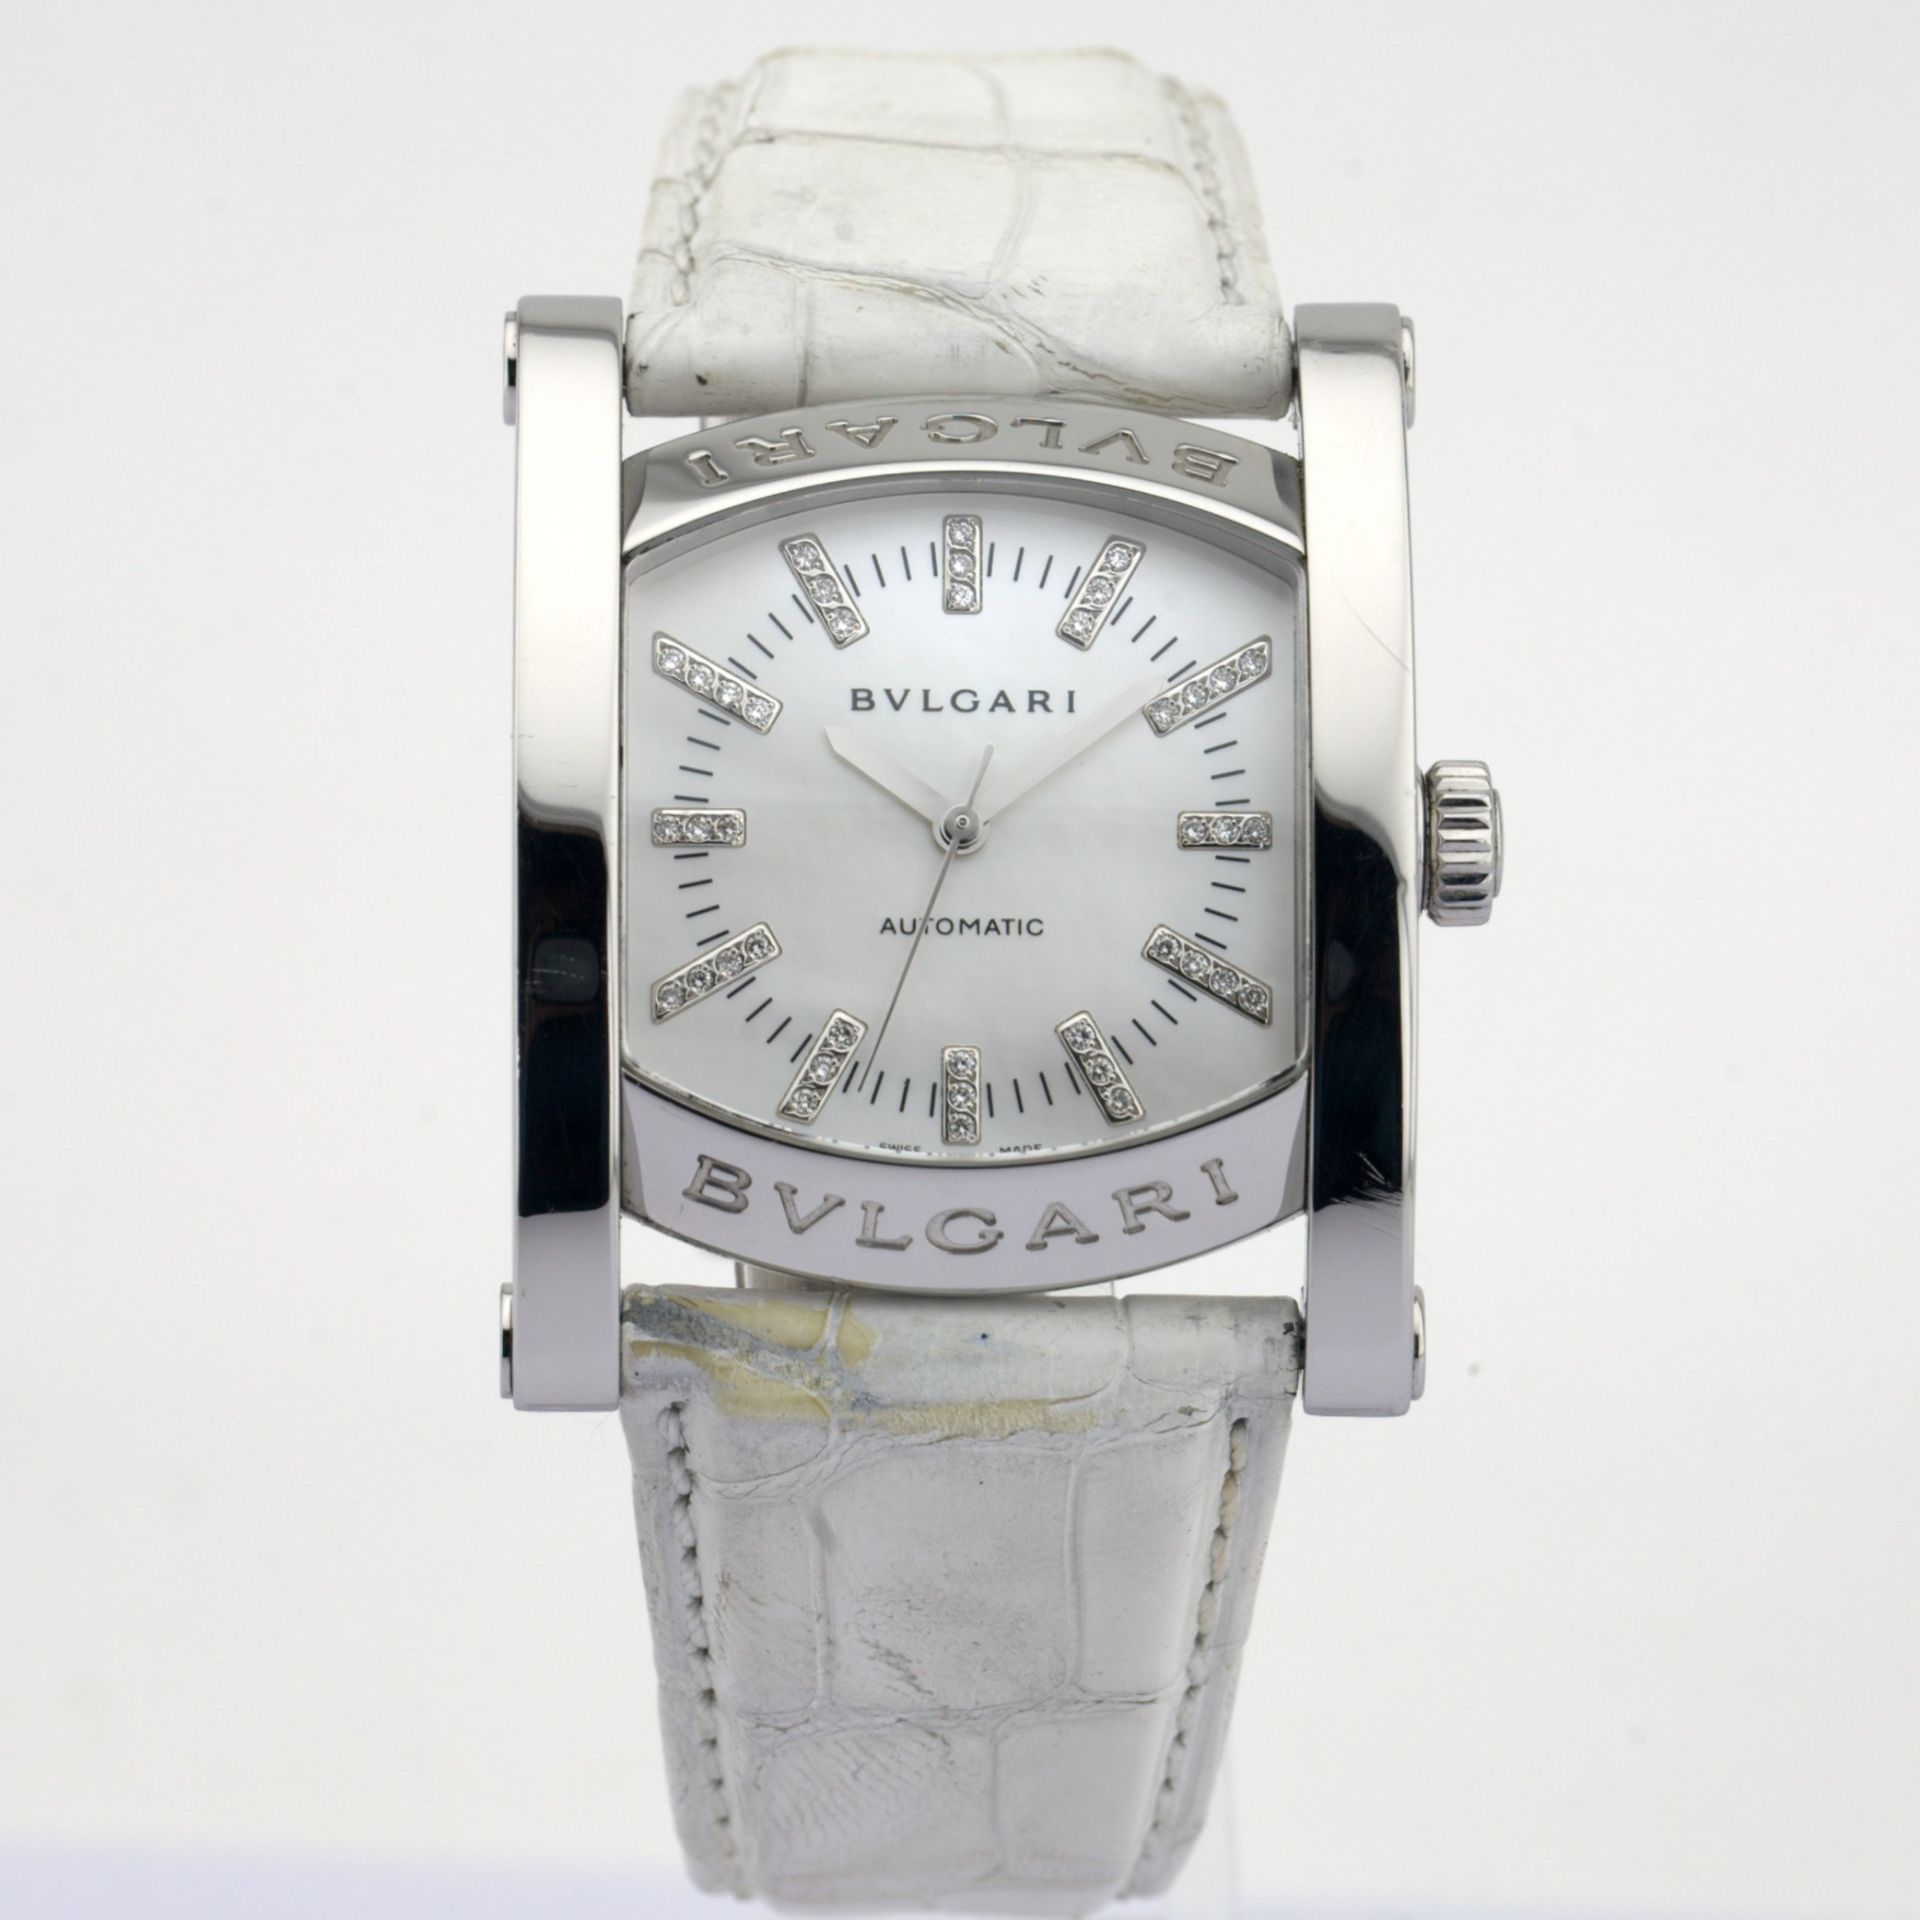 Bvlgari / AA44S Diamond Mother of pearl dial - Gentlmen's Steel Wrist Watch - Image 4 of 11